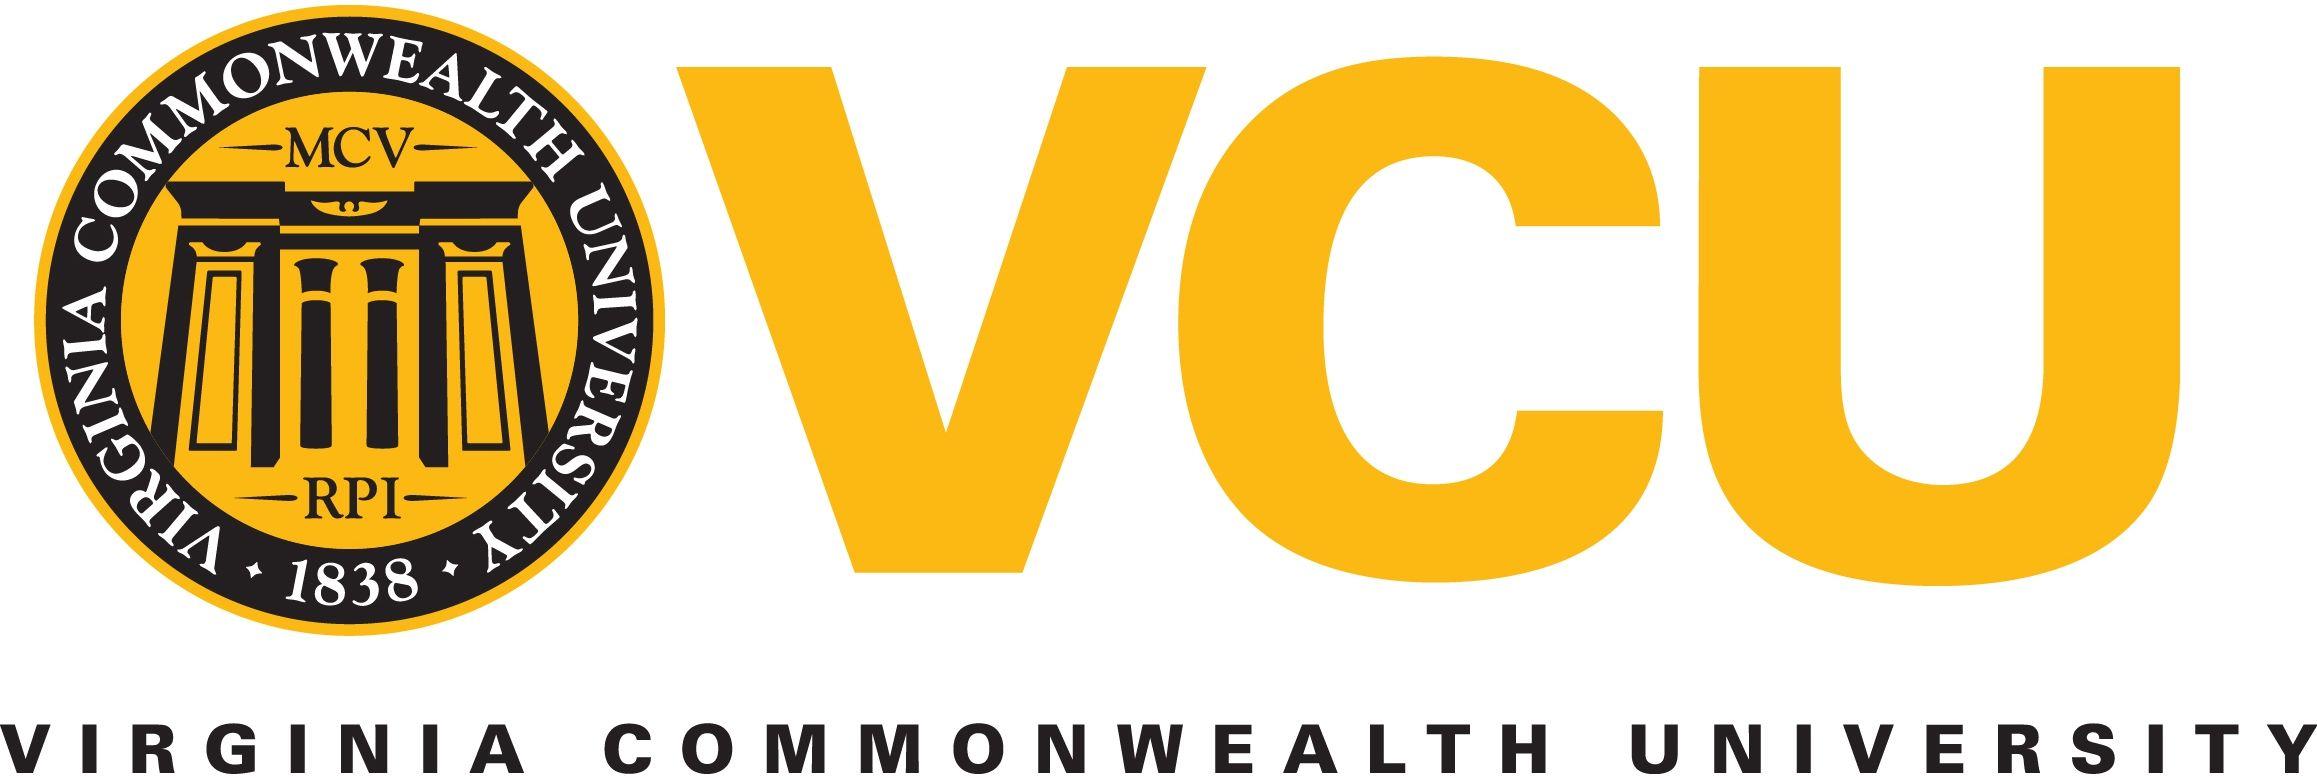 Virginia Commonwealth University Logo - VCU-Logo-Seal-Virginia-Commonwealth-University | LogoMania ...